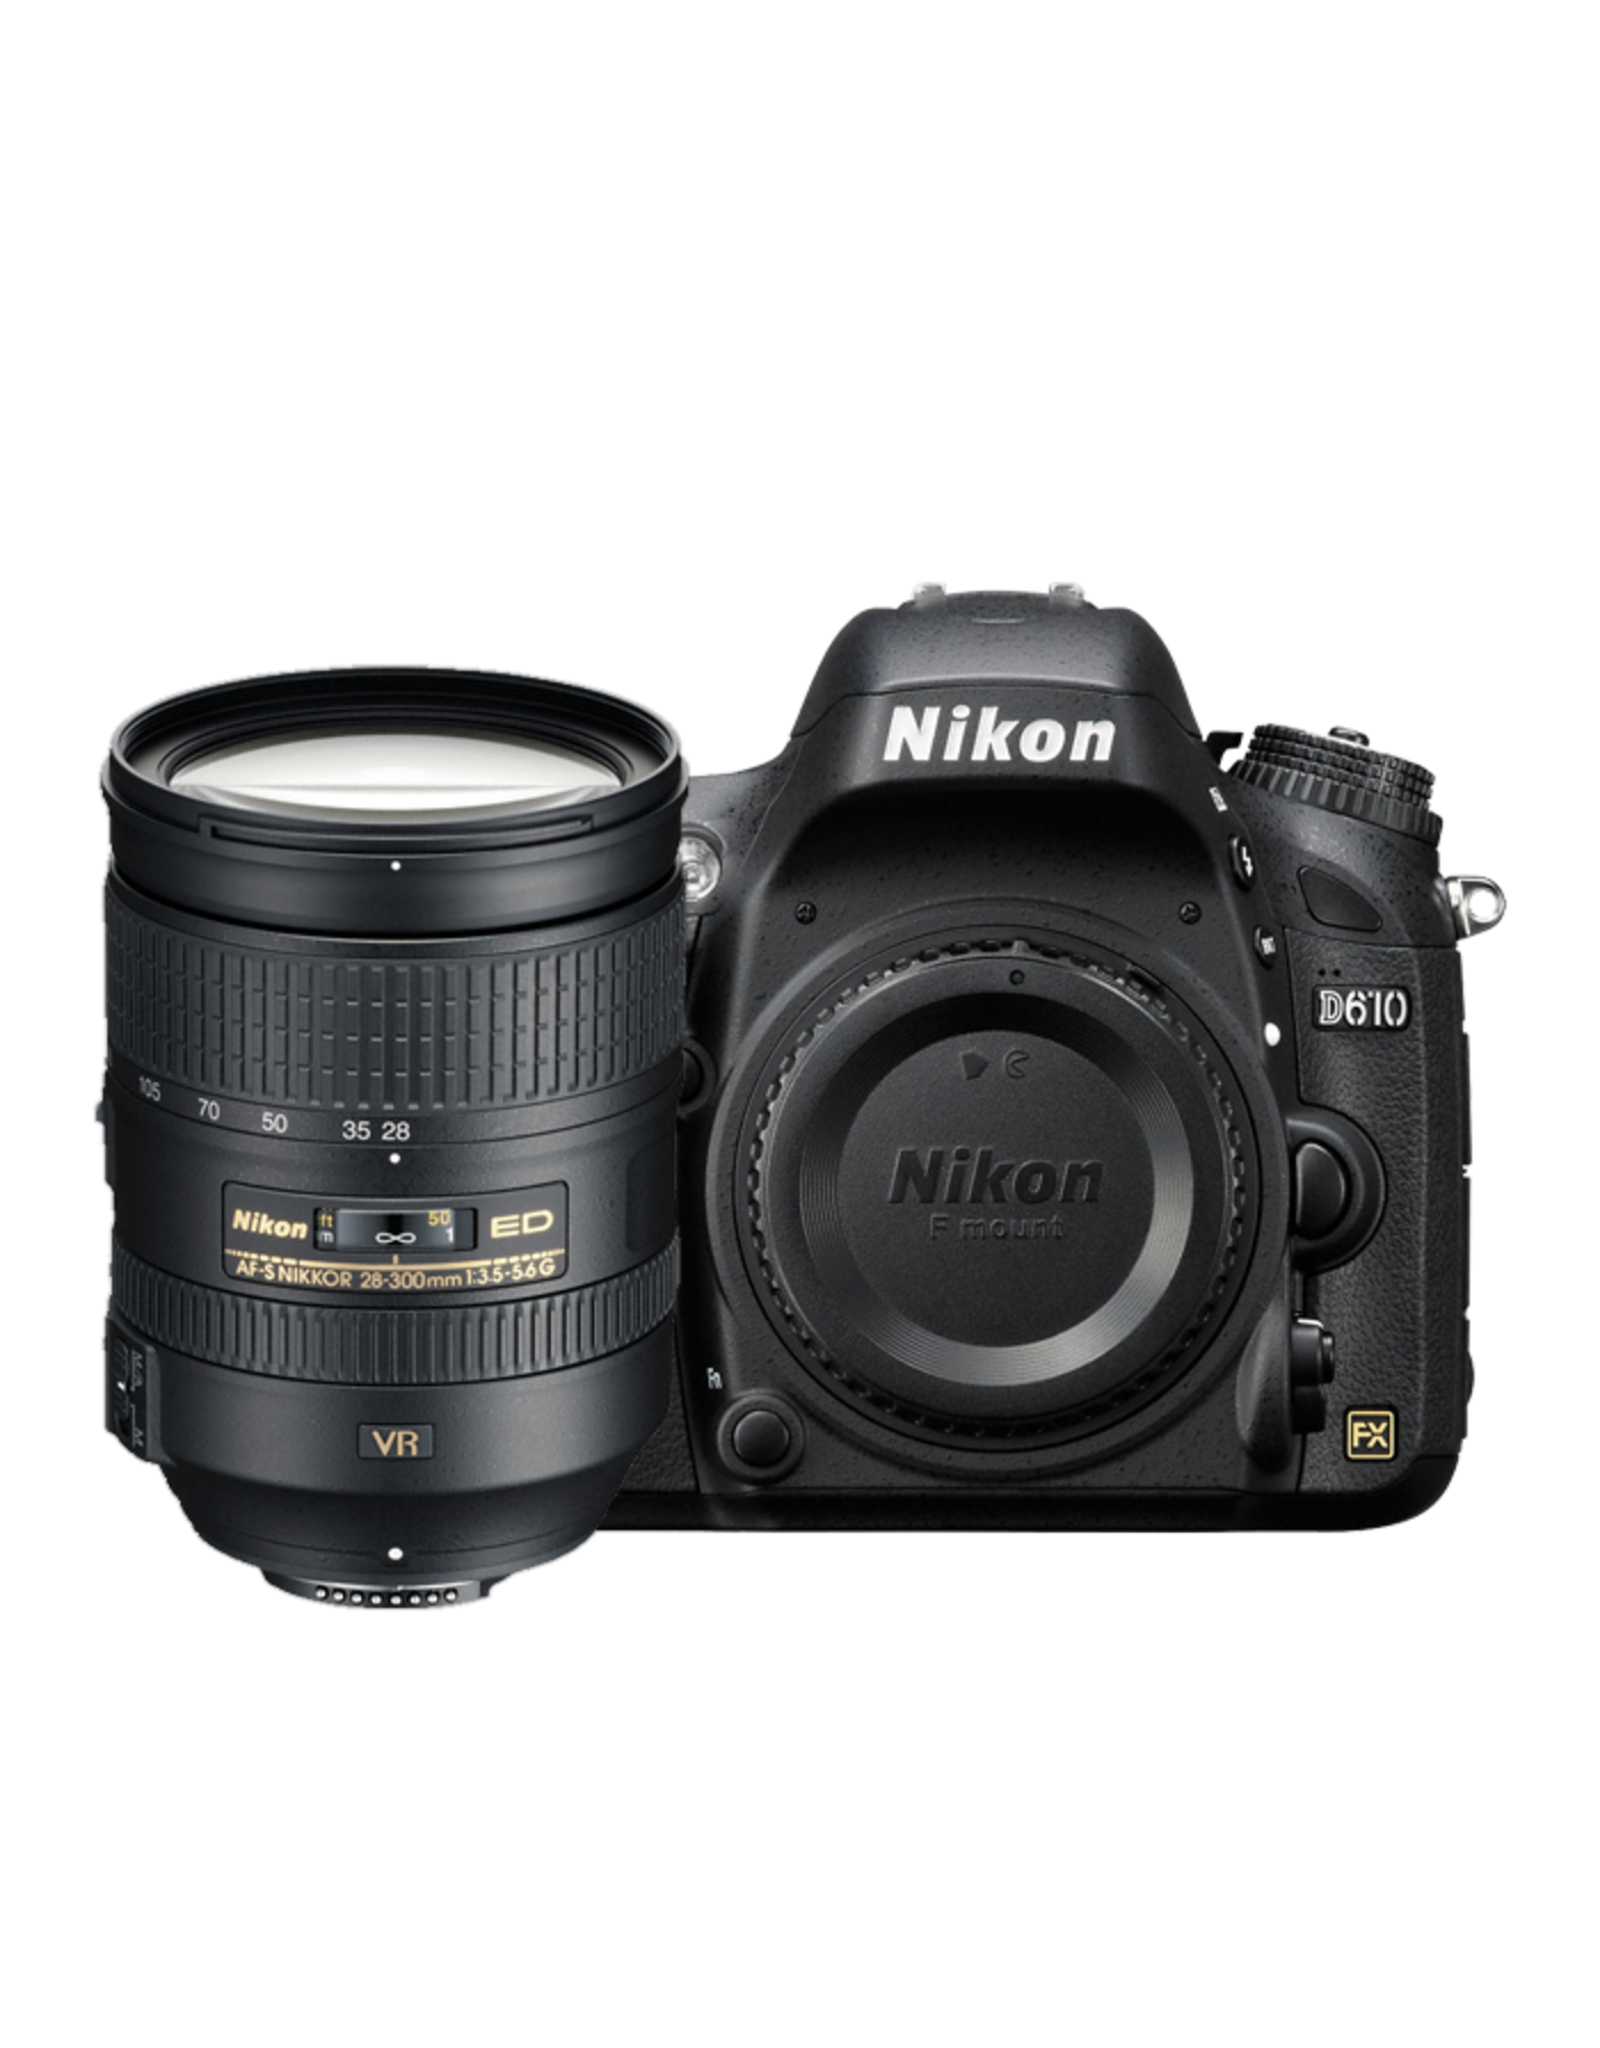 Nikon Nikon D610 Full Frame DSLR with 28-300mm VR Lens